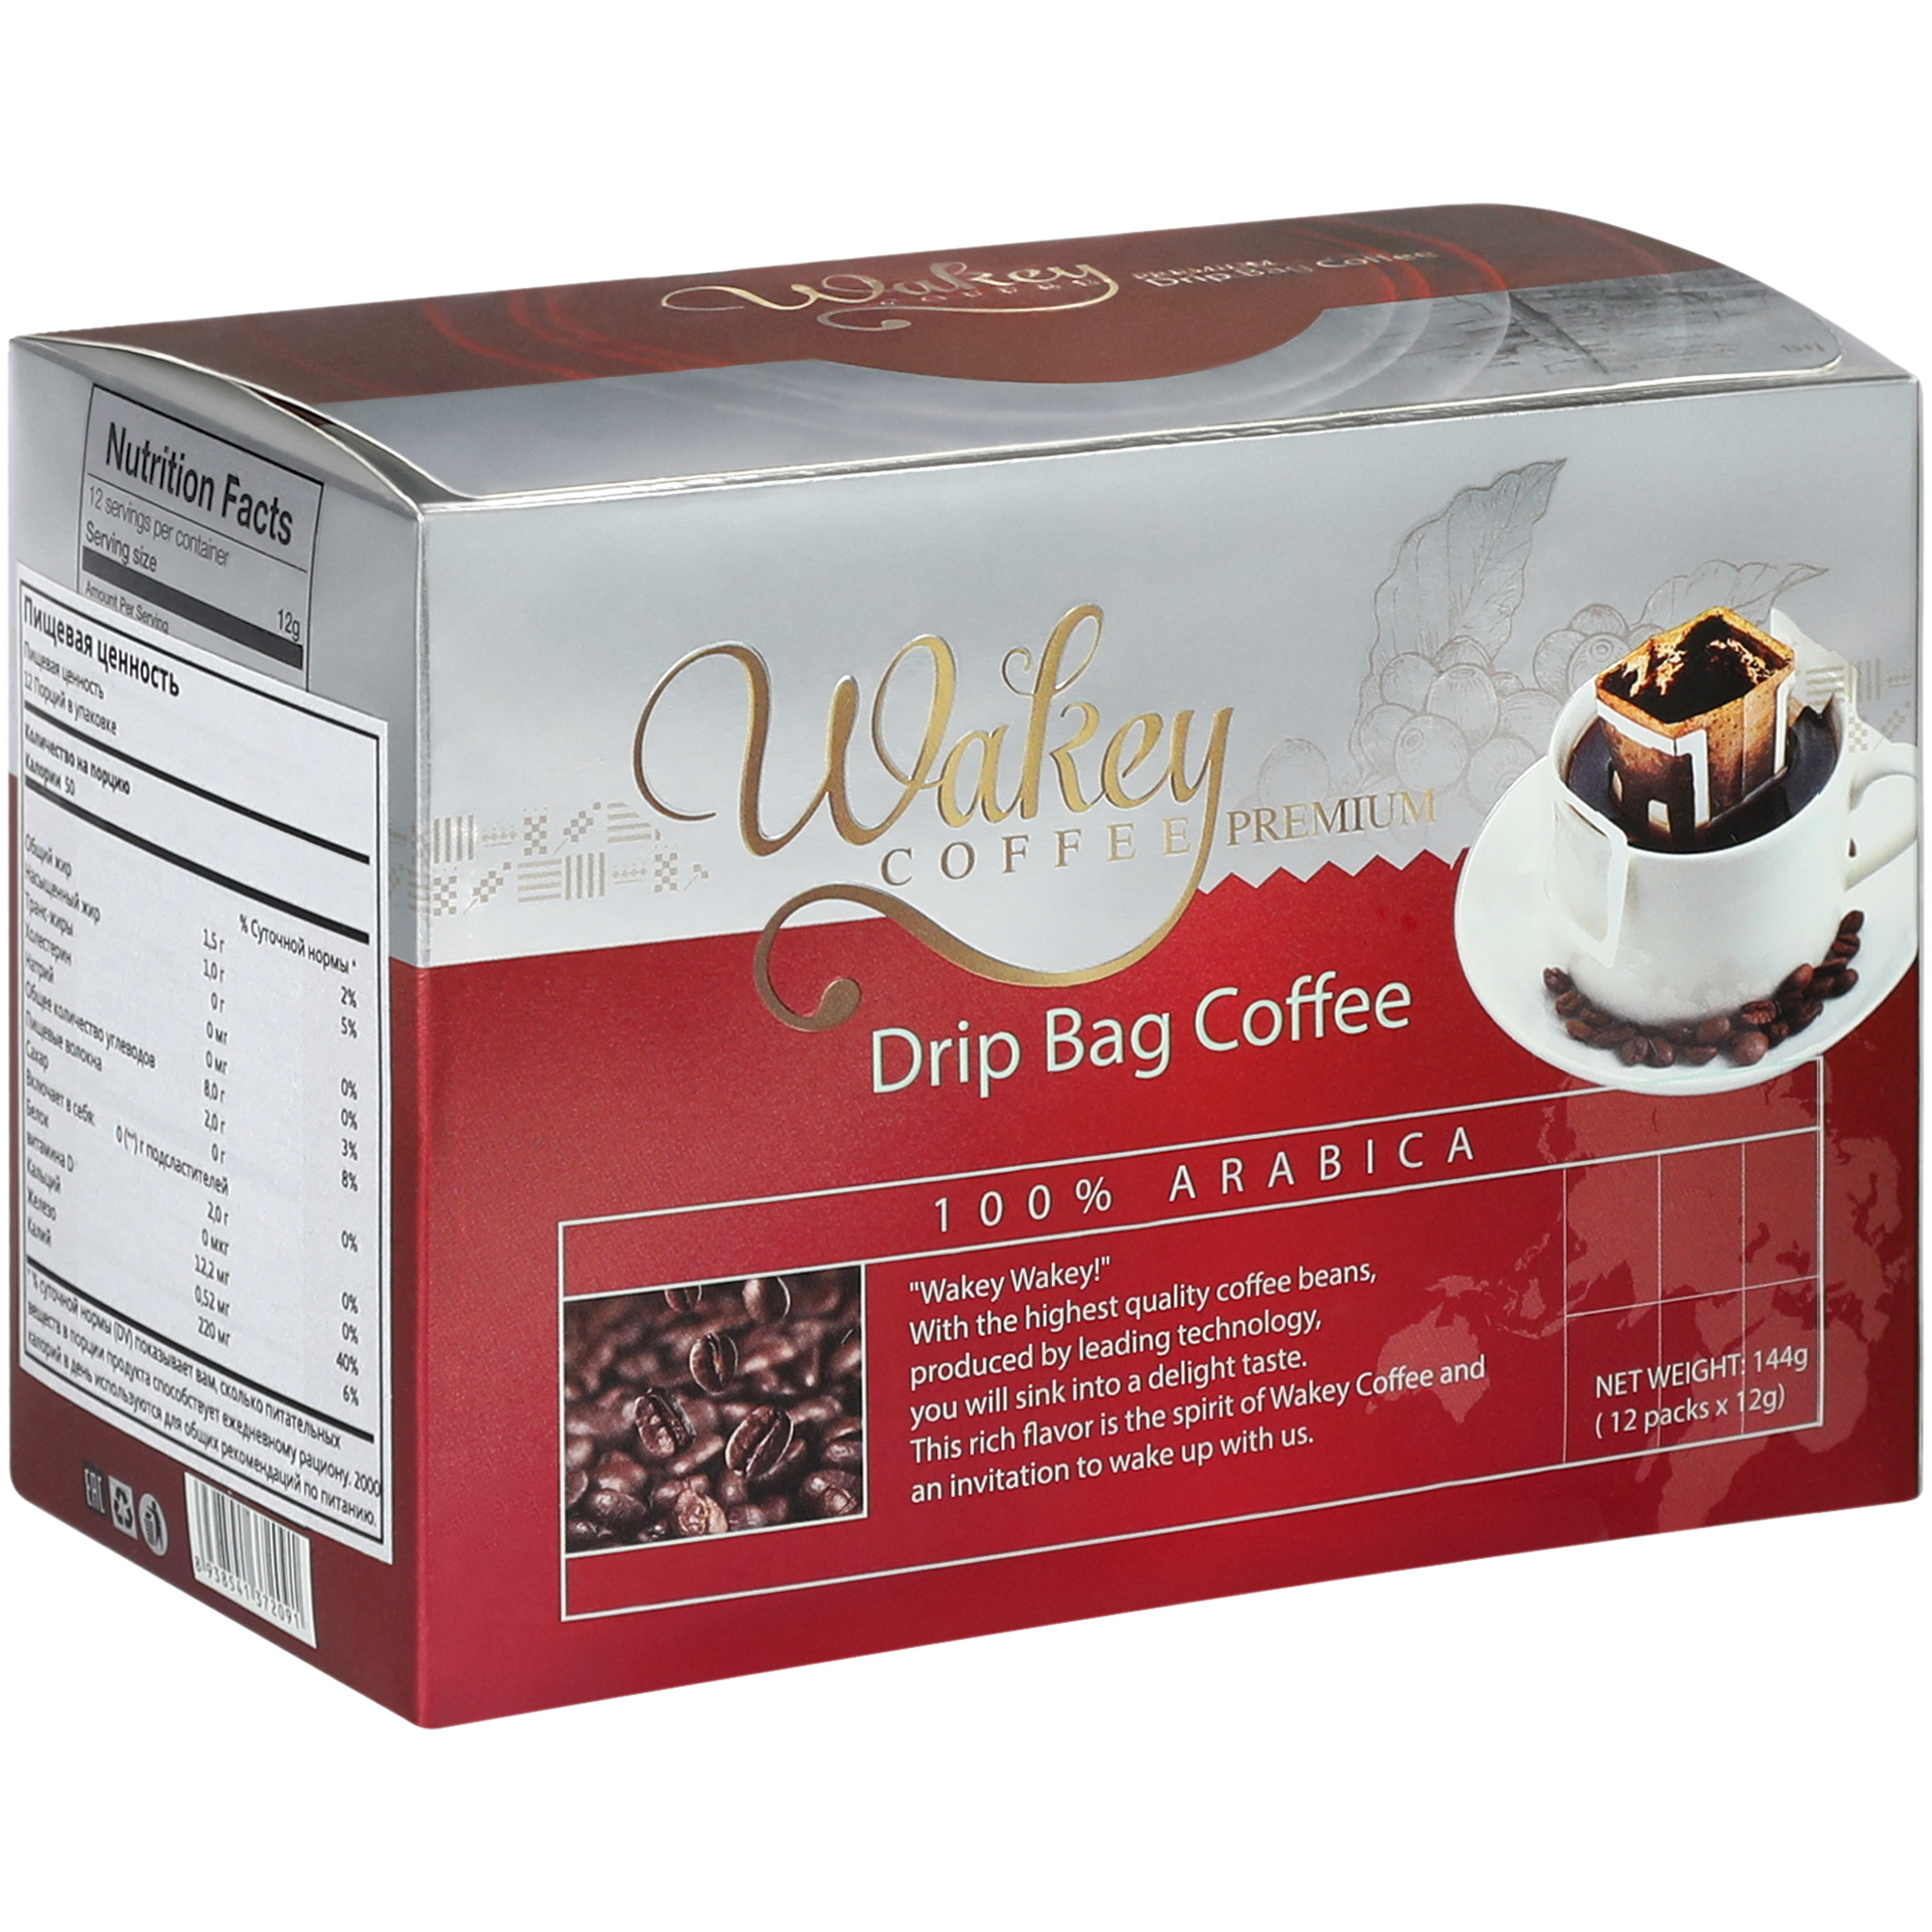 Кофе Wakey премиум арабика, 145 г кофе brai gran 100% арабика зерно в у 1 кг